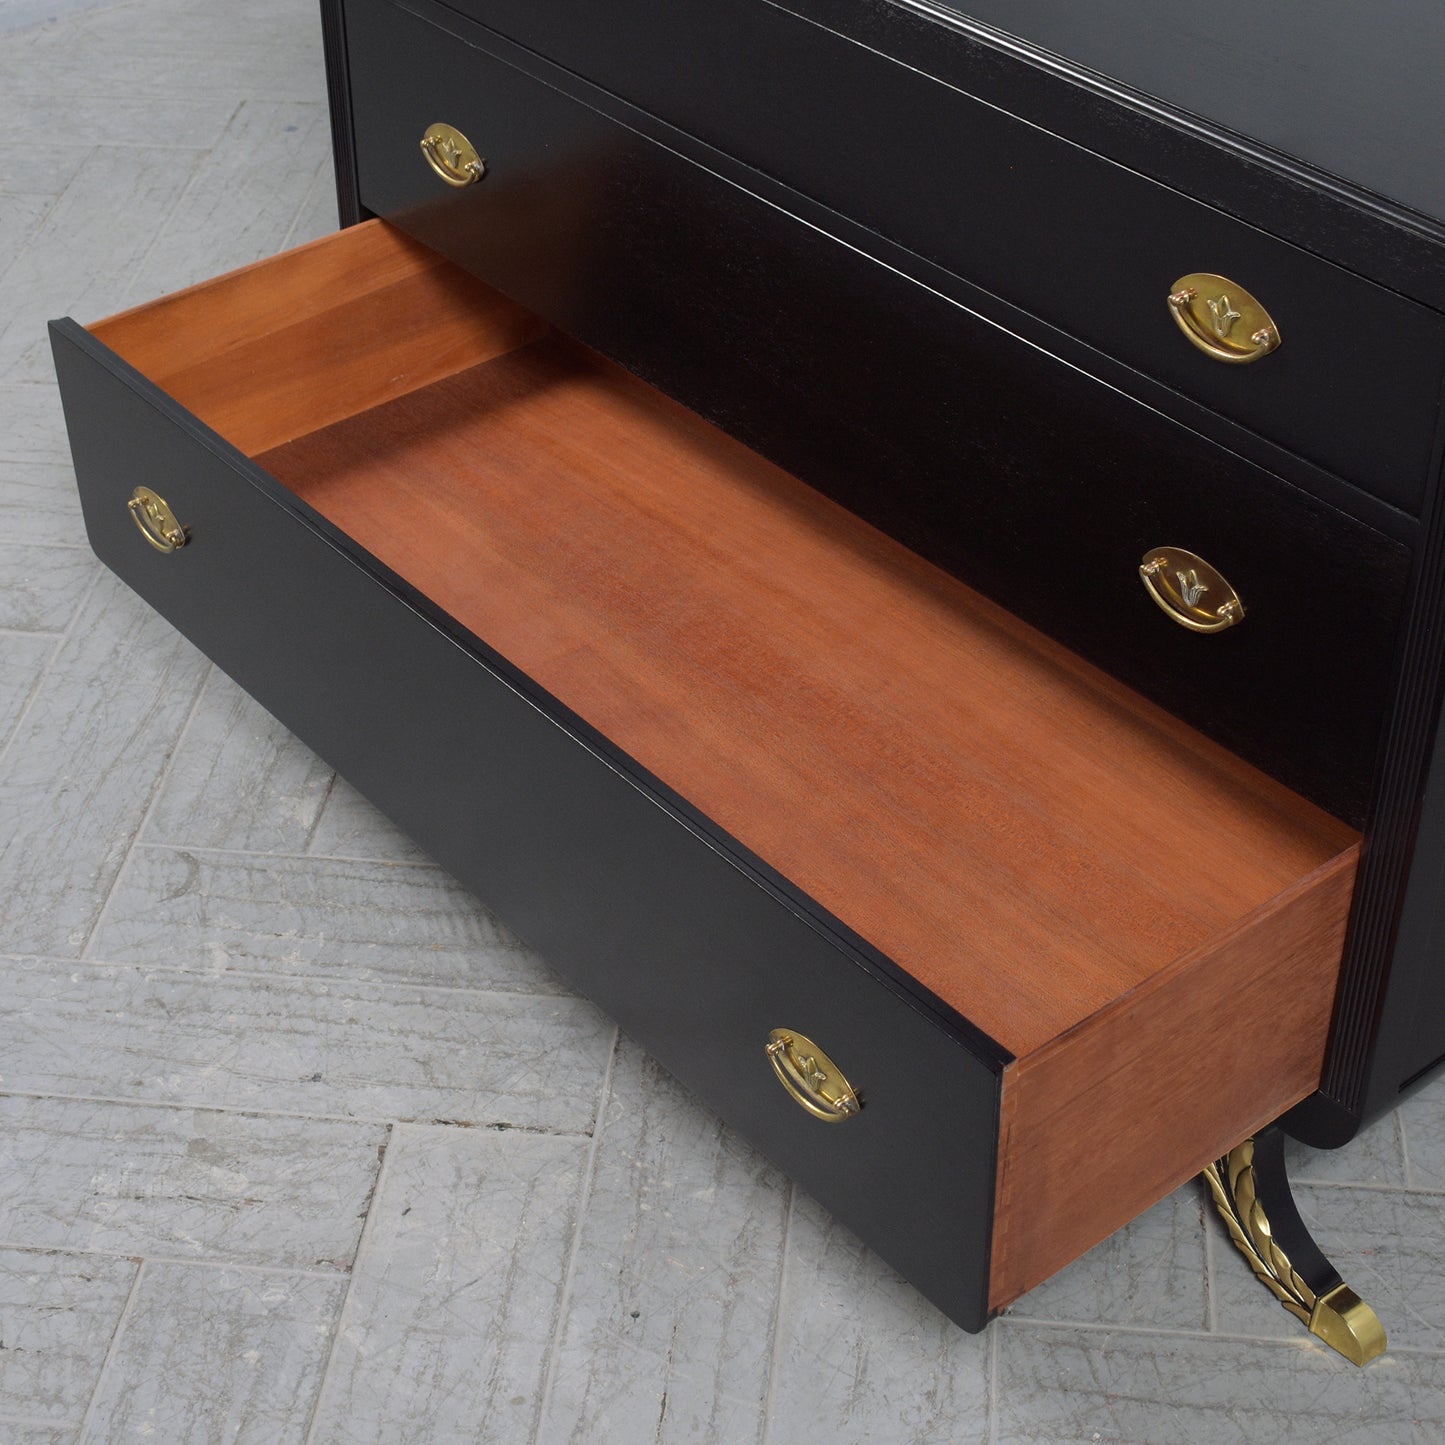 Antique Empire Ebonized Dresser: Timeless Craftsmanship Meets Modern Elegance